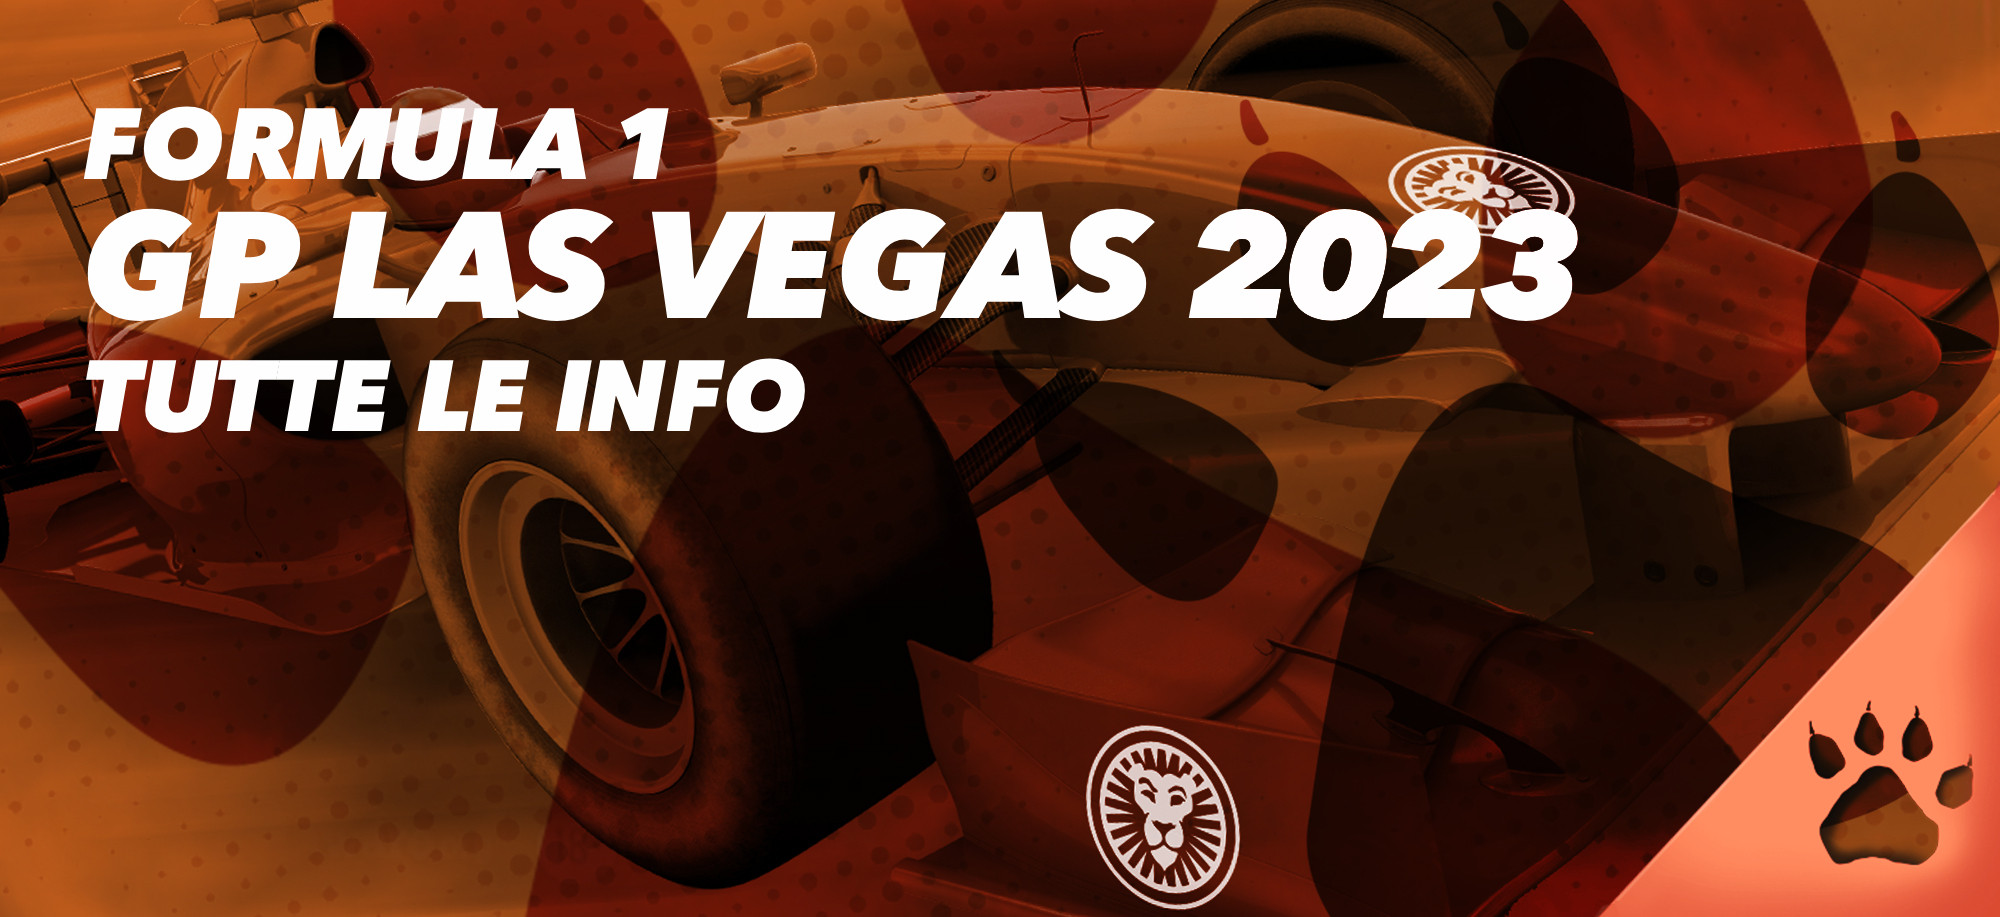 Formula 1 - Gran Premio di Las Vegas - 19 novembre 2023 - Tutte le info | News & Blog LeoVegas Sport